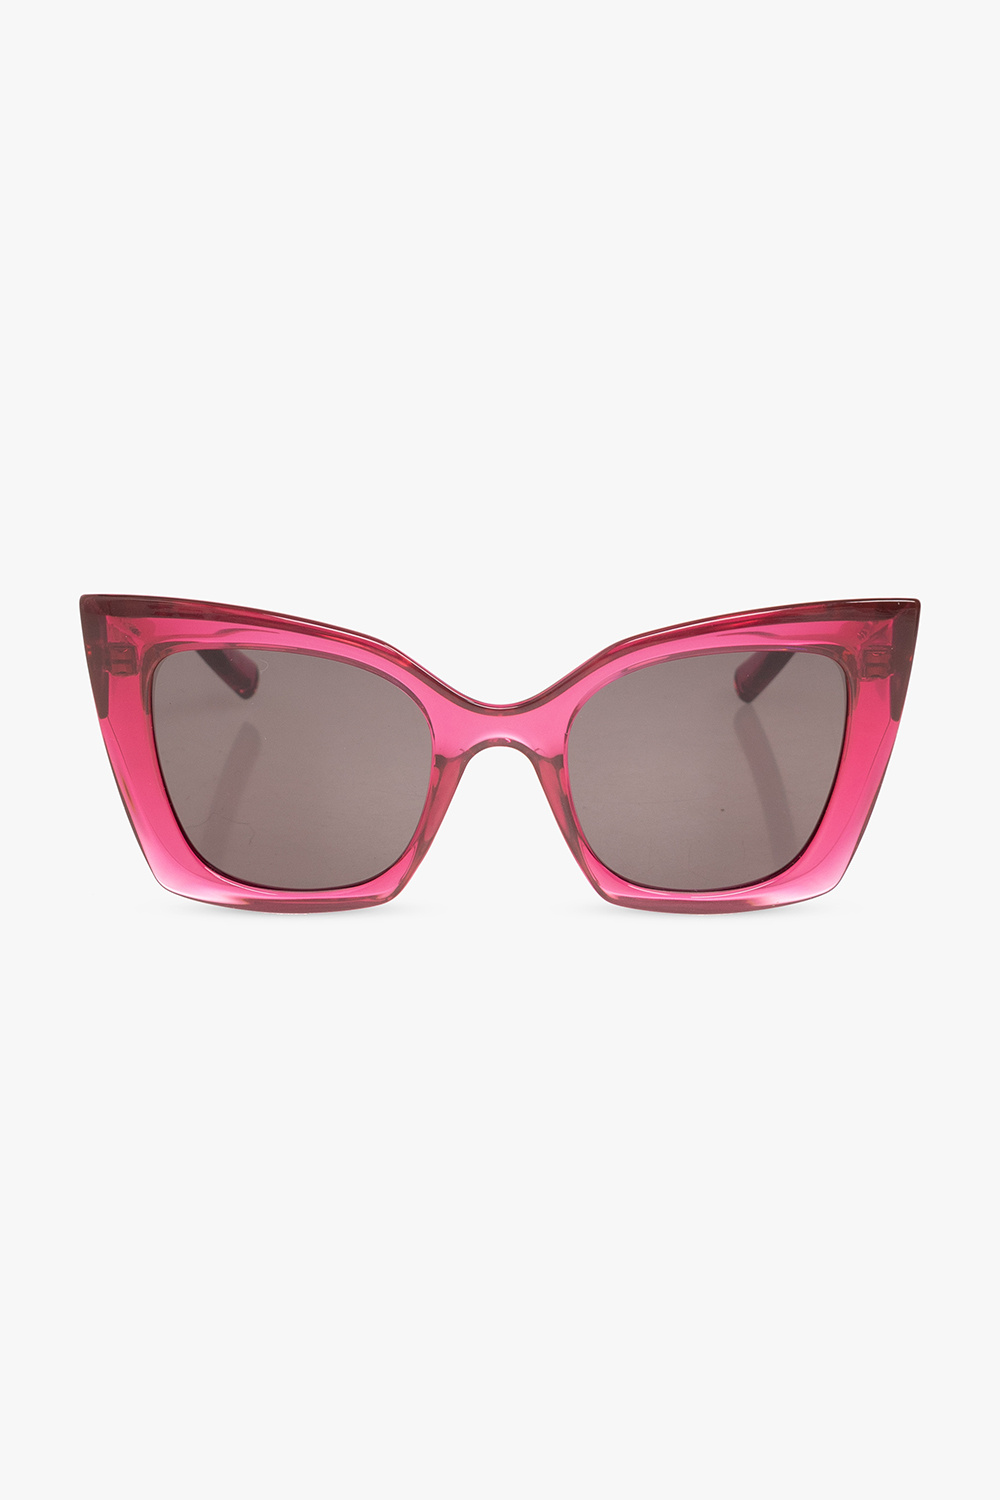 Saint Laurent ‘SL 552’ sunglasses